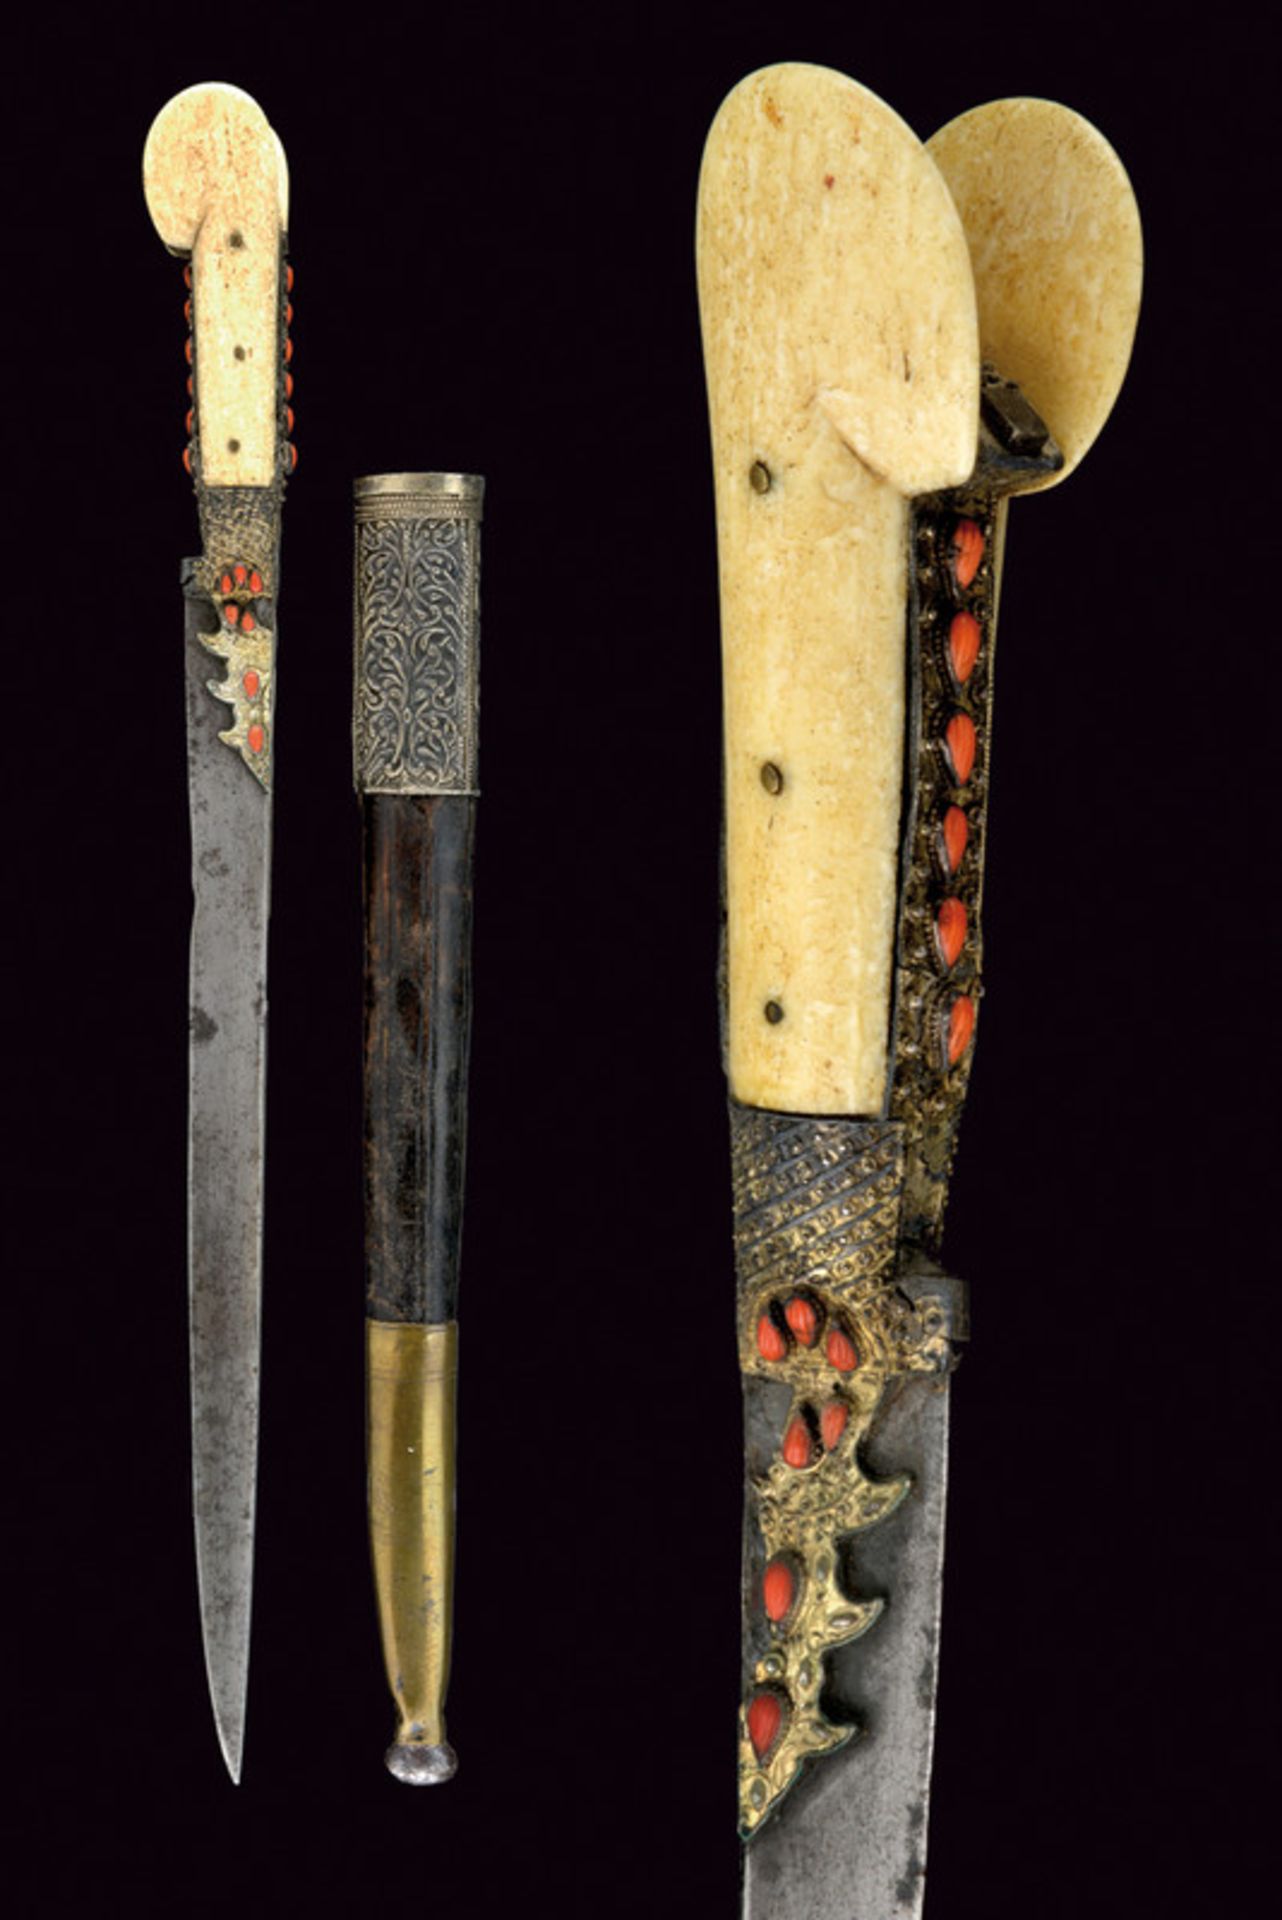 A yatagan dating: first quarter of the 19th Century provenance: Turkey Straight, single-edged blade;